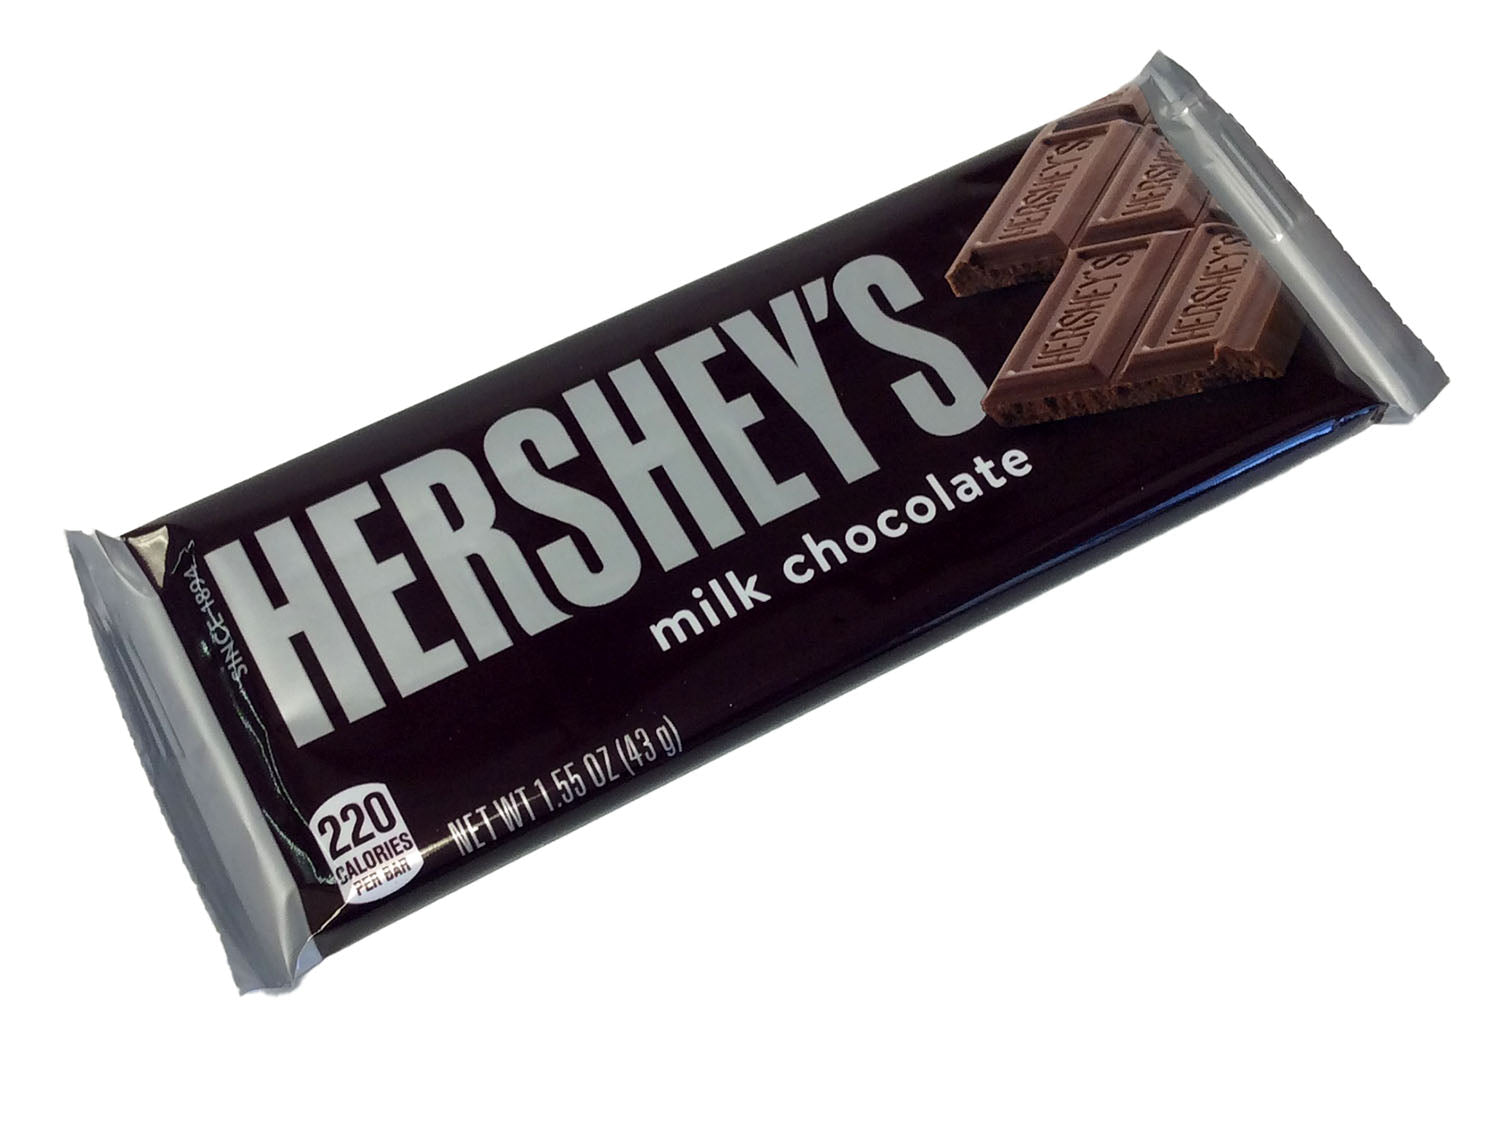 Hershey's Milk Chocolate Bar - 1.55 oz bar